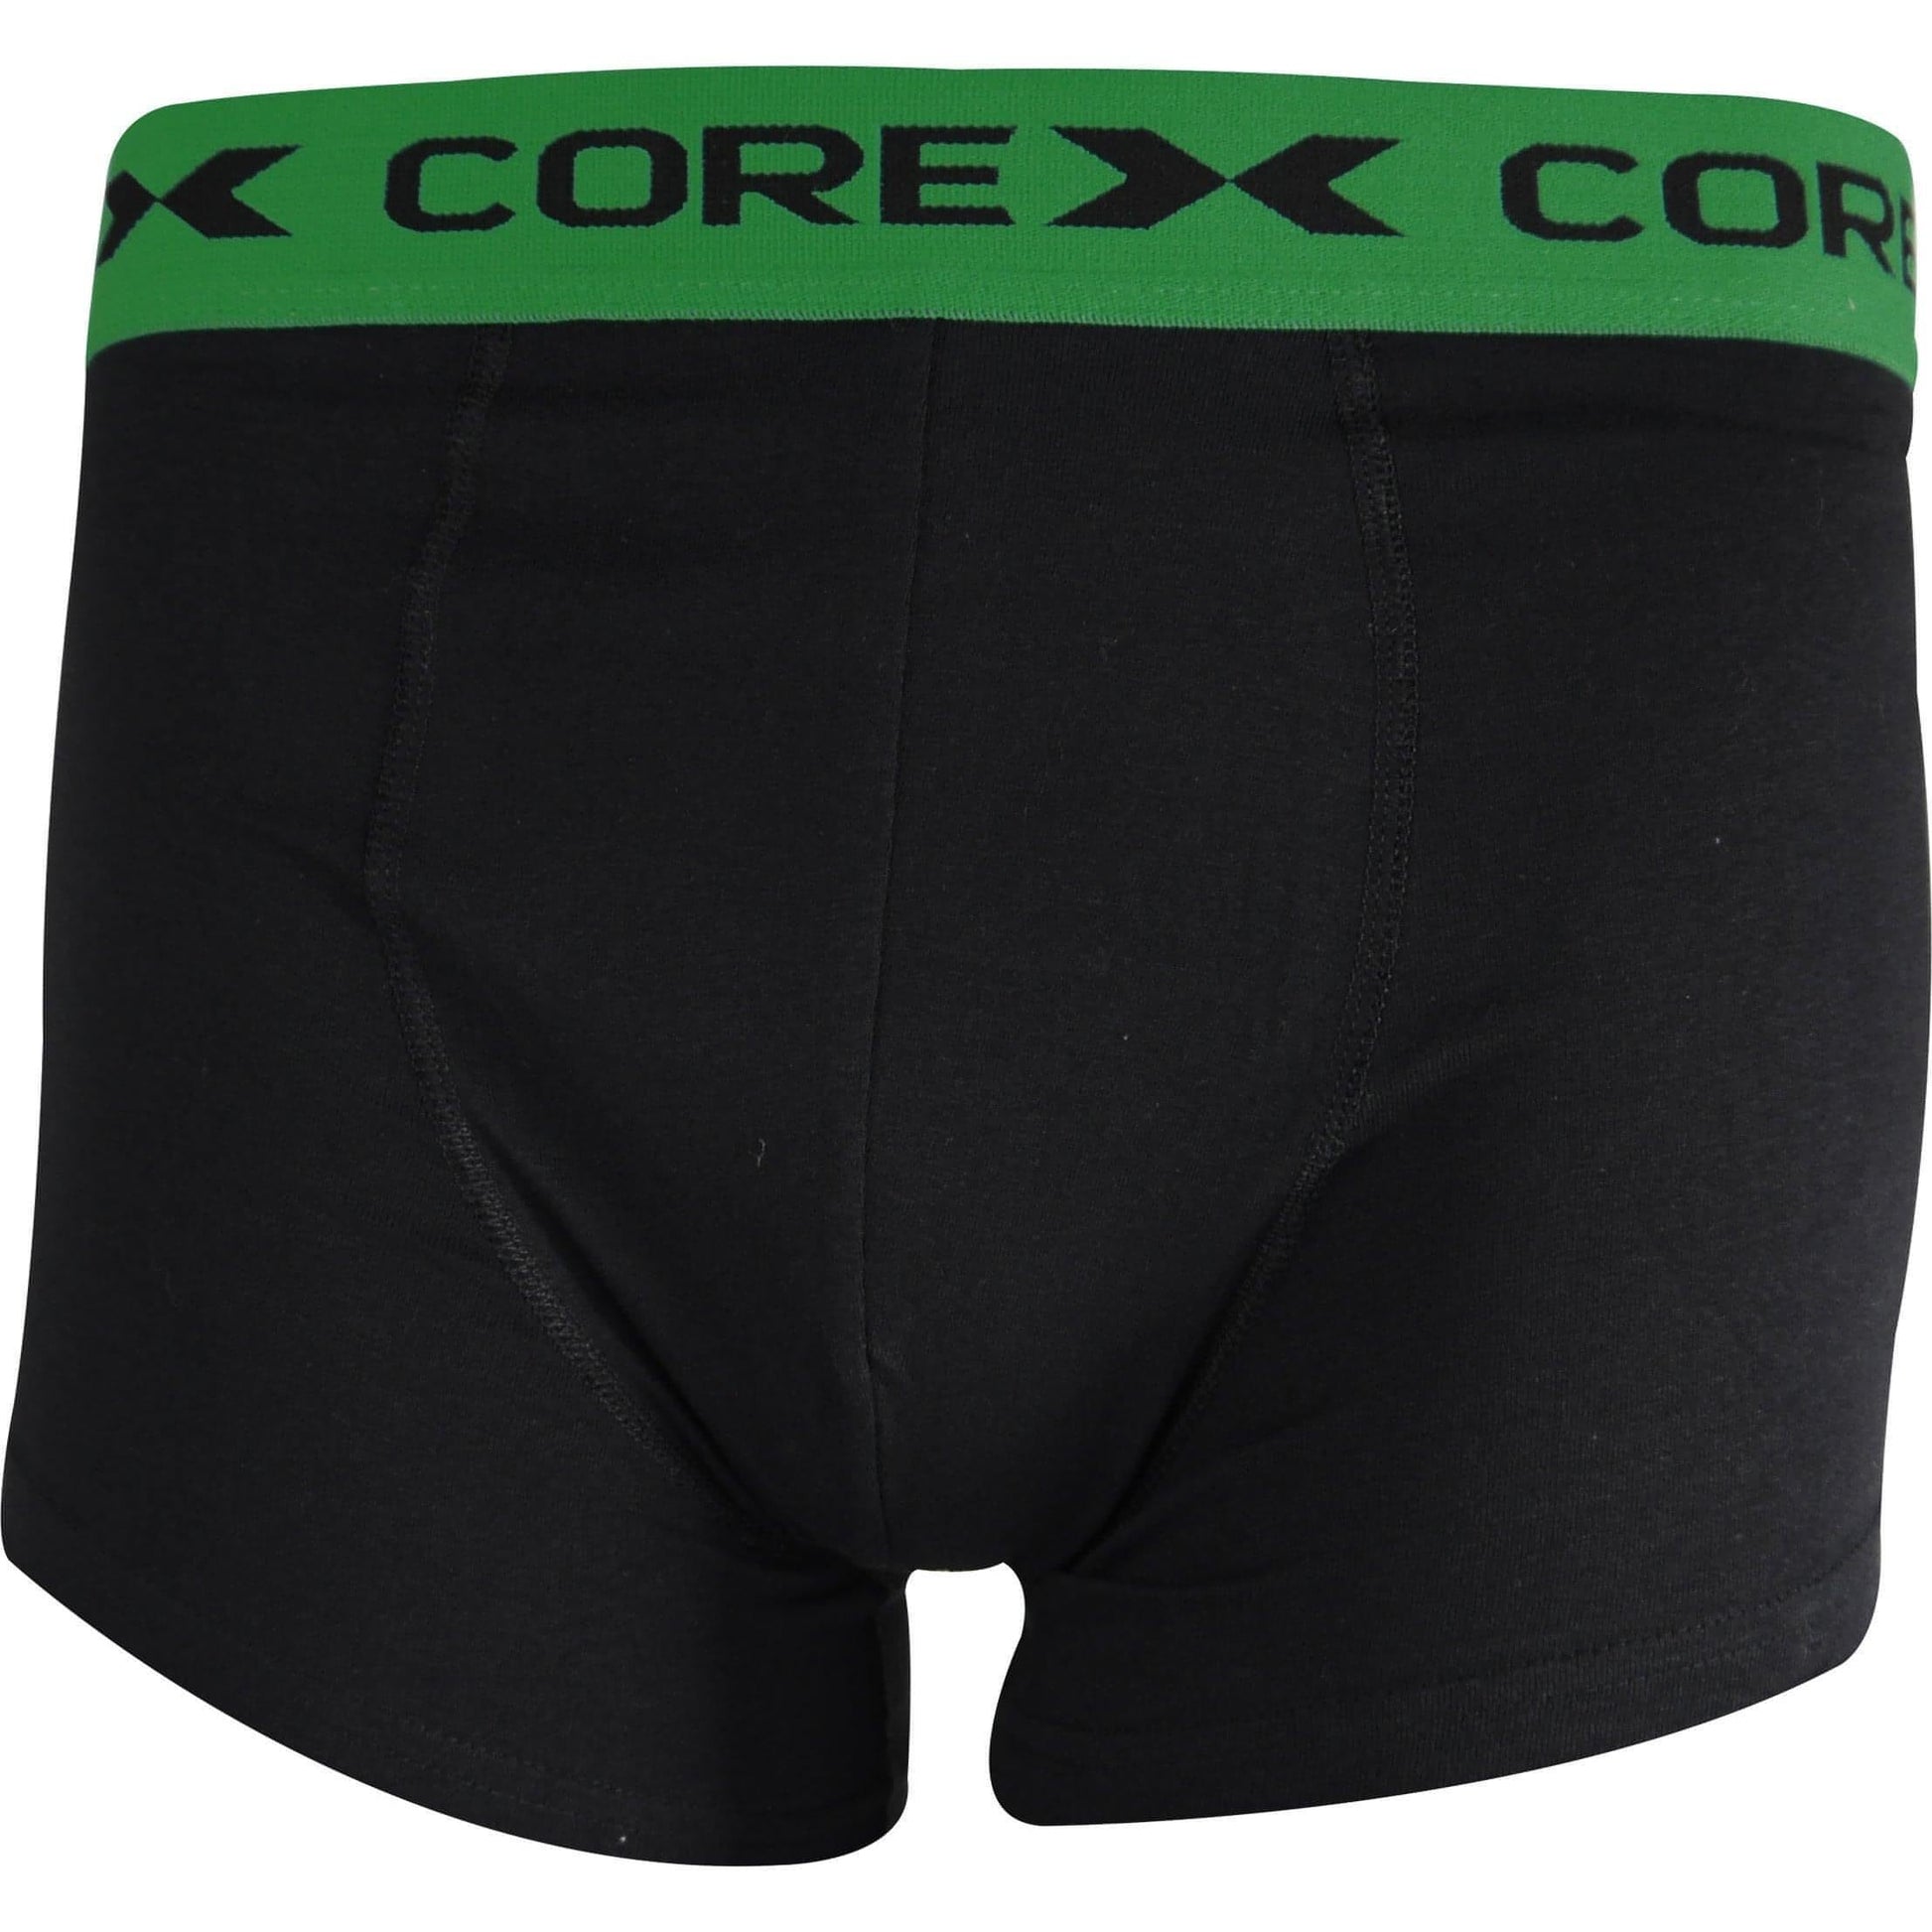 Corex Fitness Classic Pack Boxers 1P204921Wm Raspberrymint Mint Front - Front View